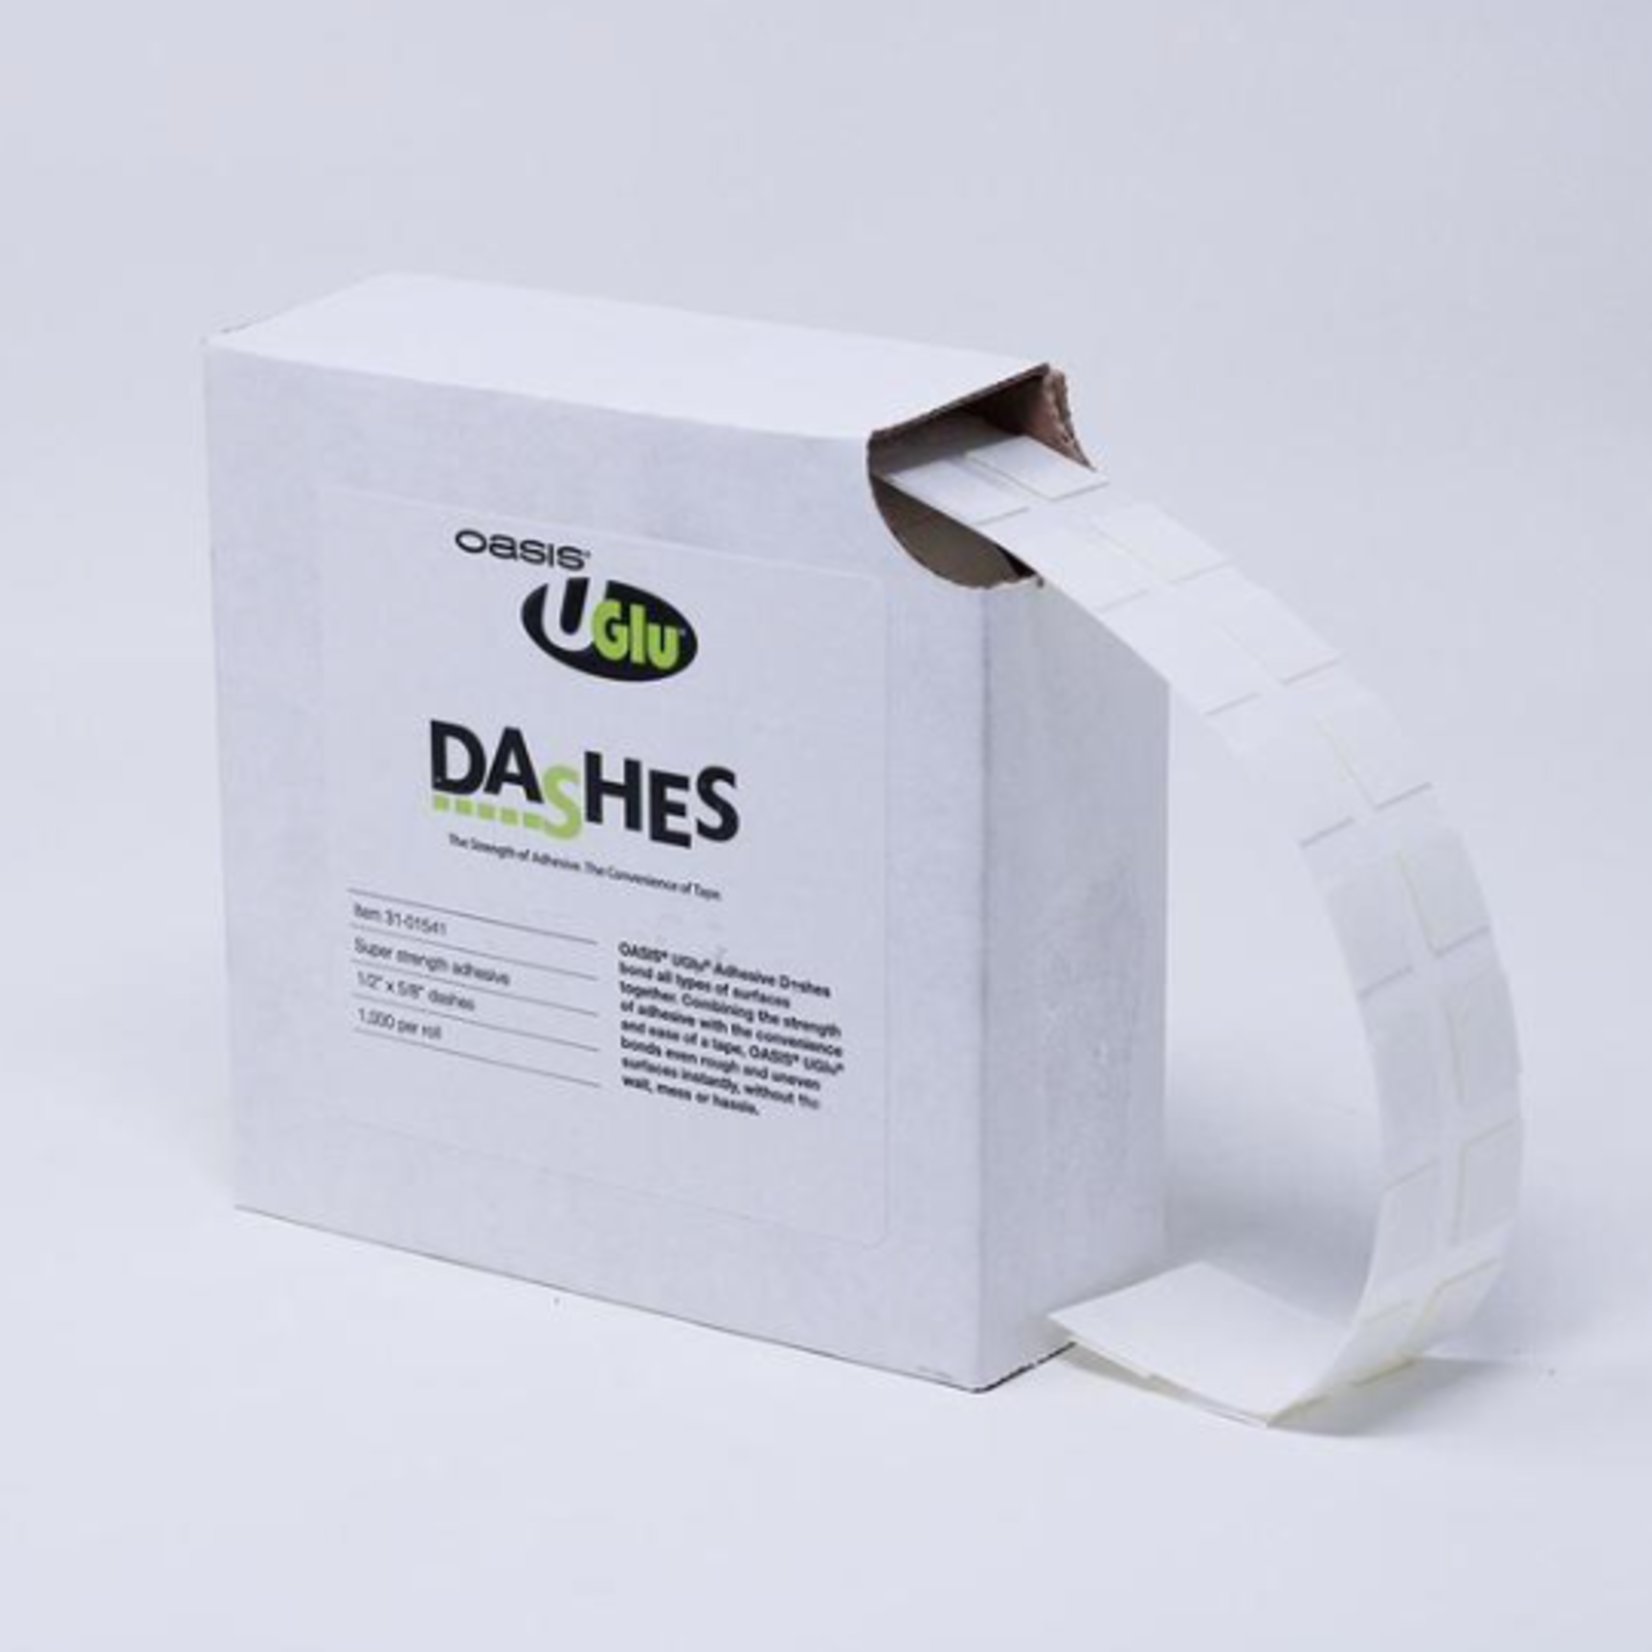 OASIS Uglu Adhesive Dashes - 1,000/Roll